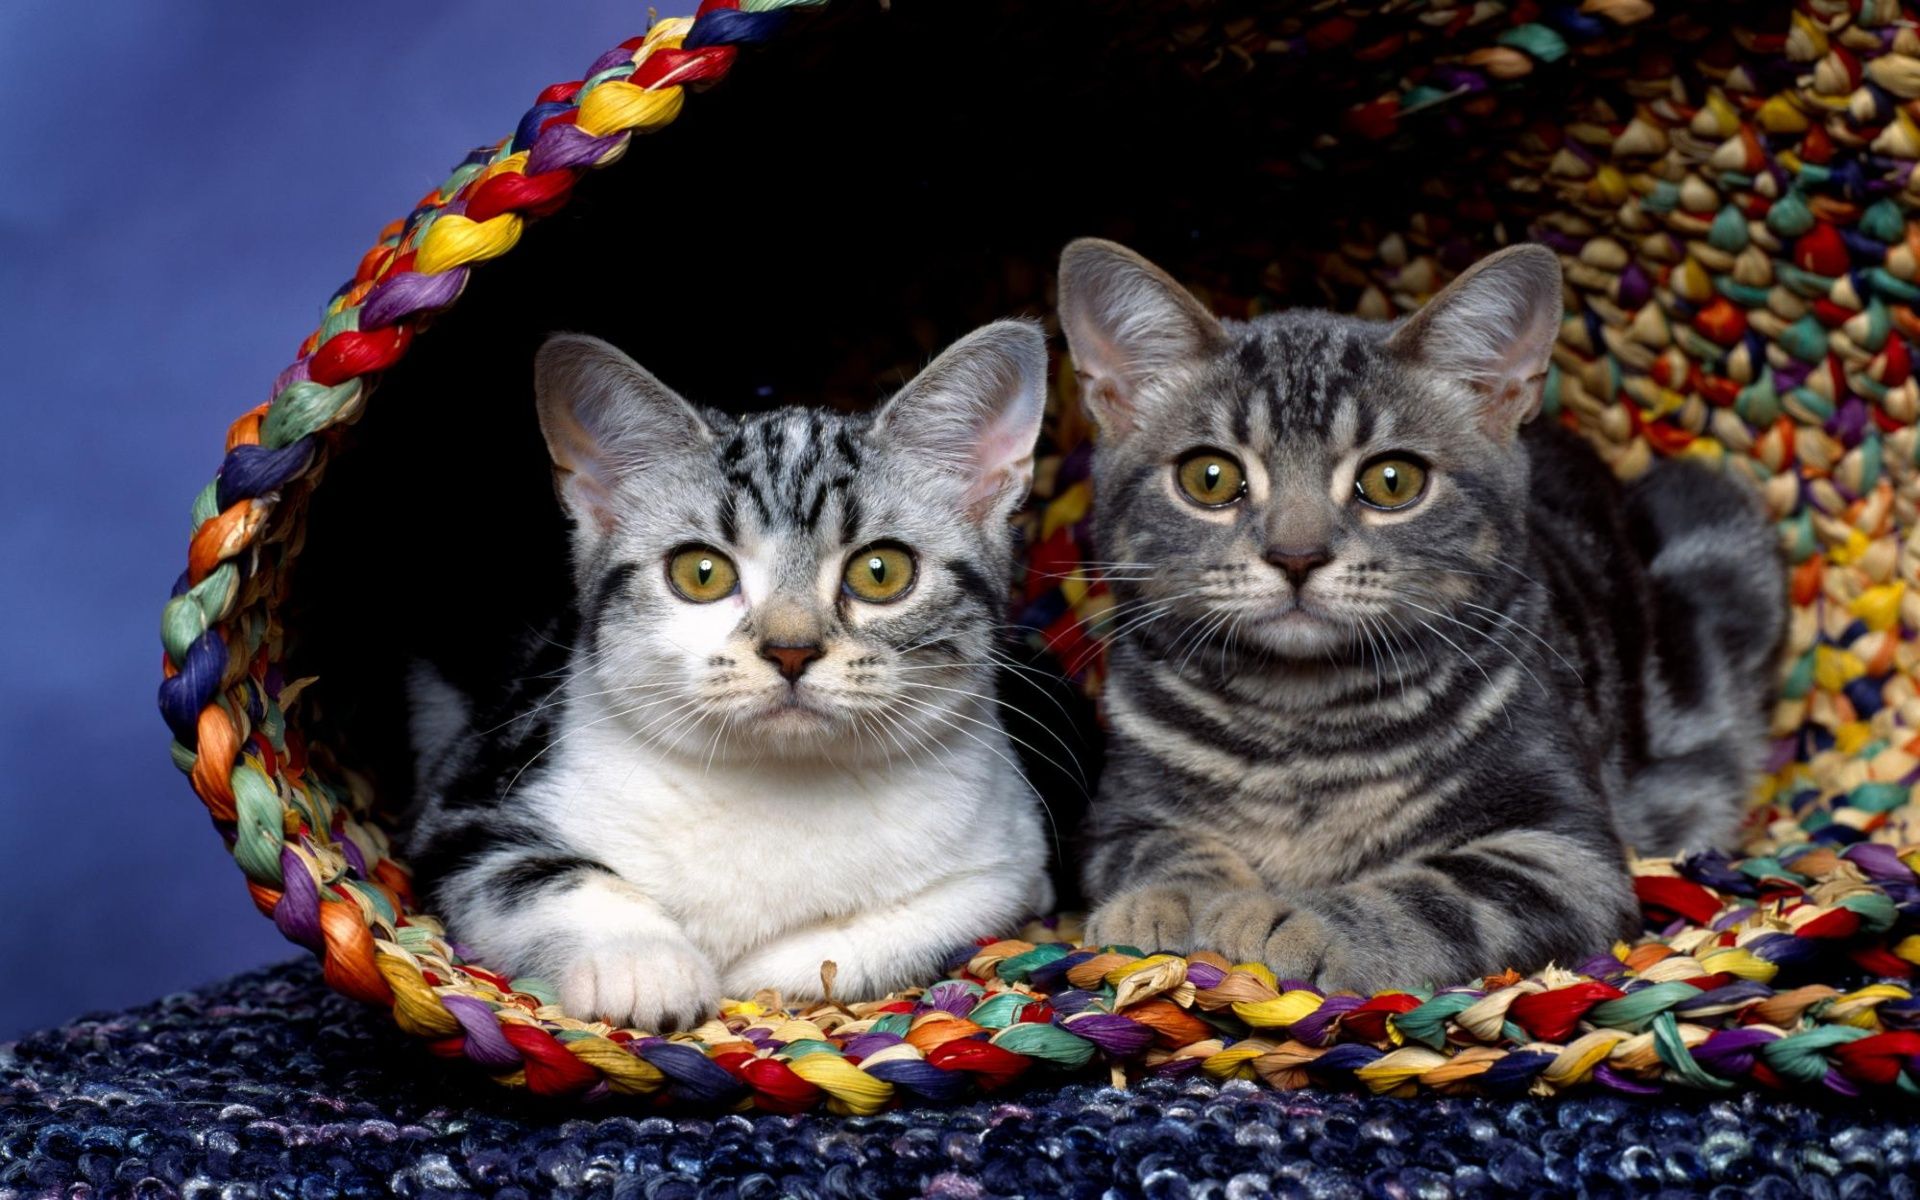 Cats in basket wallpaper. Cats in basket